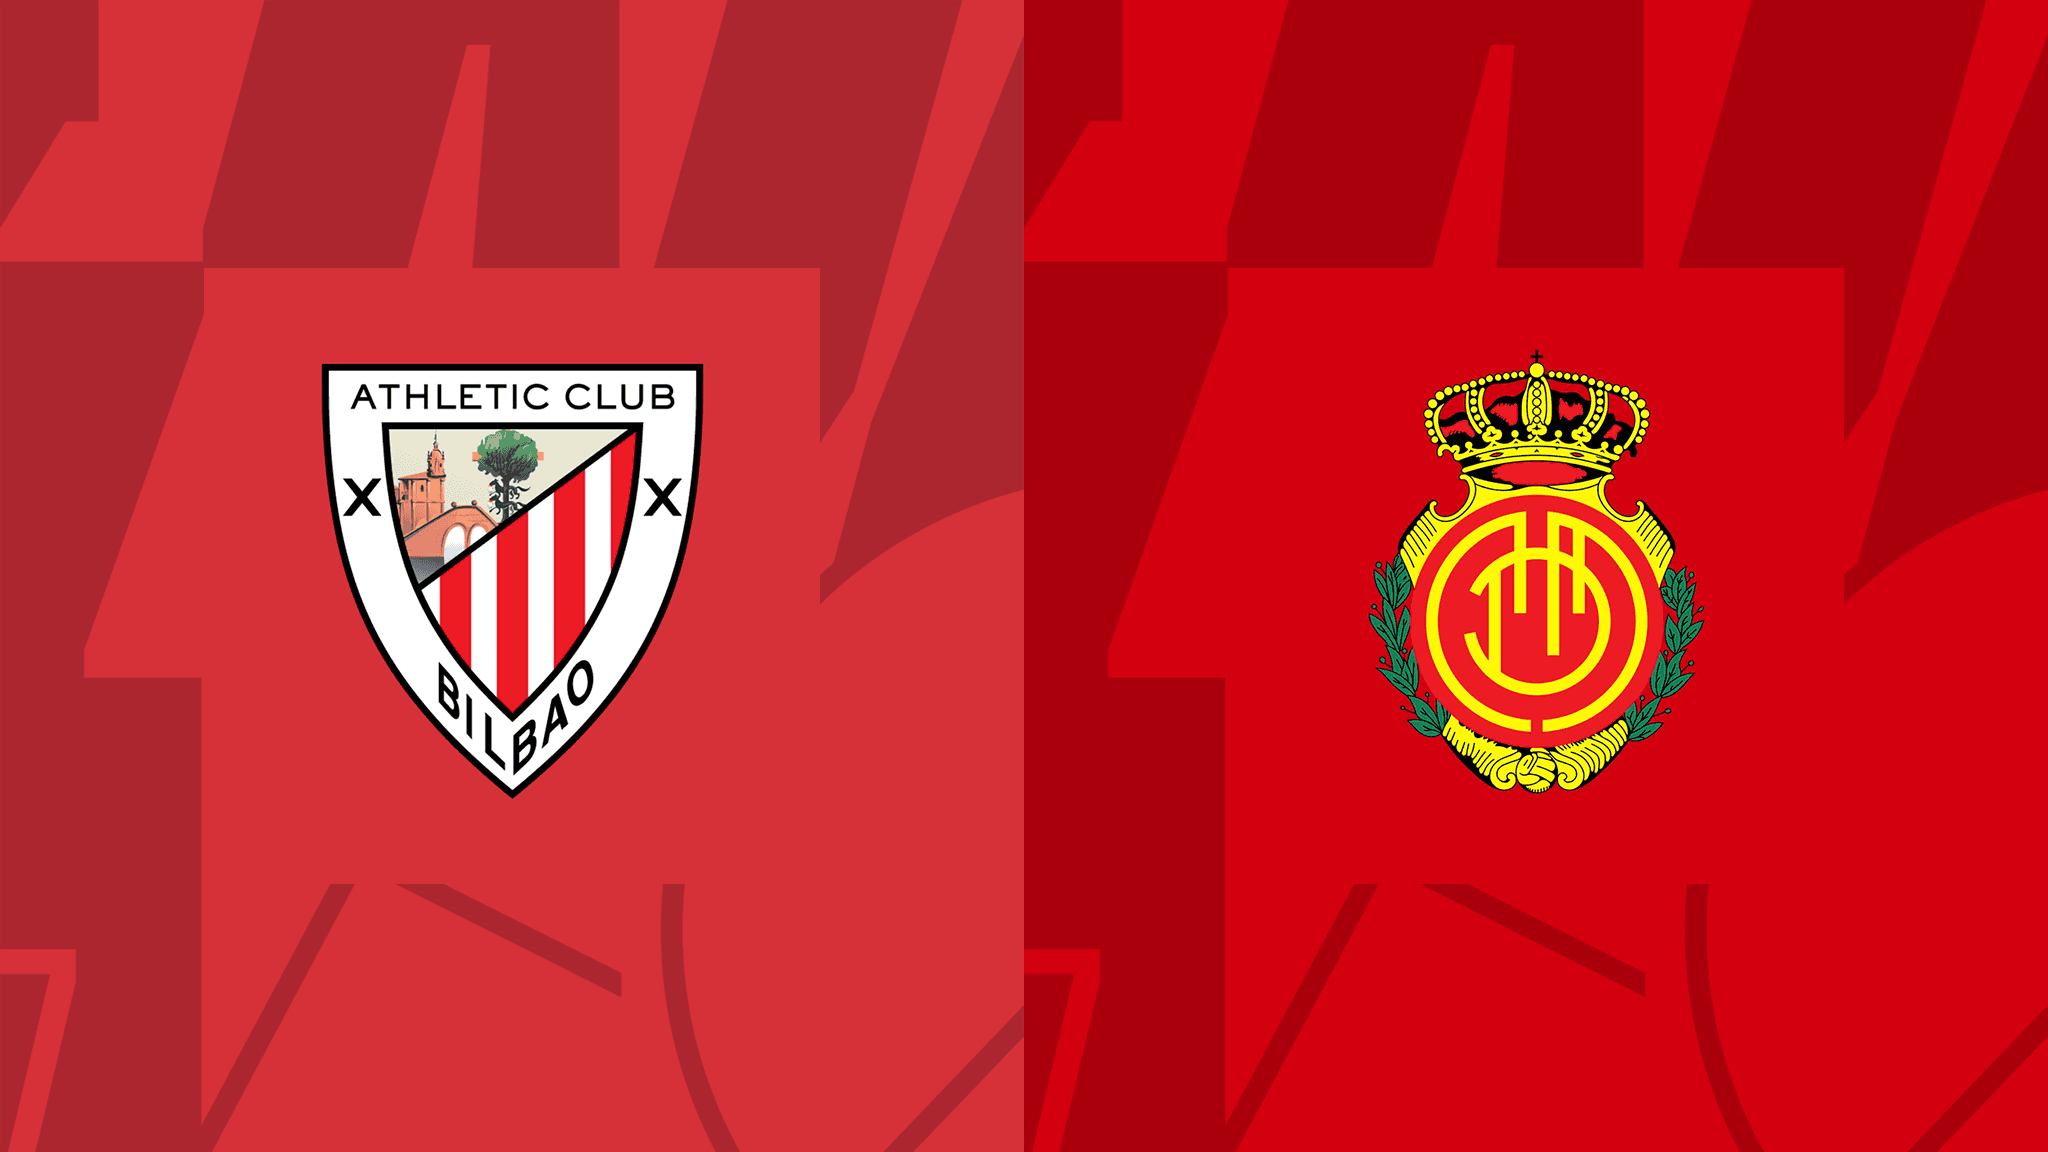  مشاهدة مباراة أتلتيك بيلباو و ريال مايوركا بث مباشر 15/08/2022 Athletic Club vs Mallorca